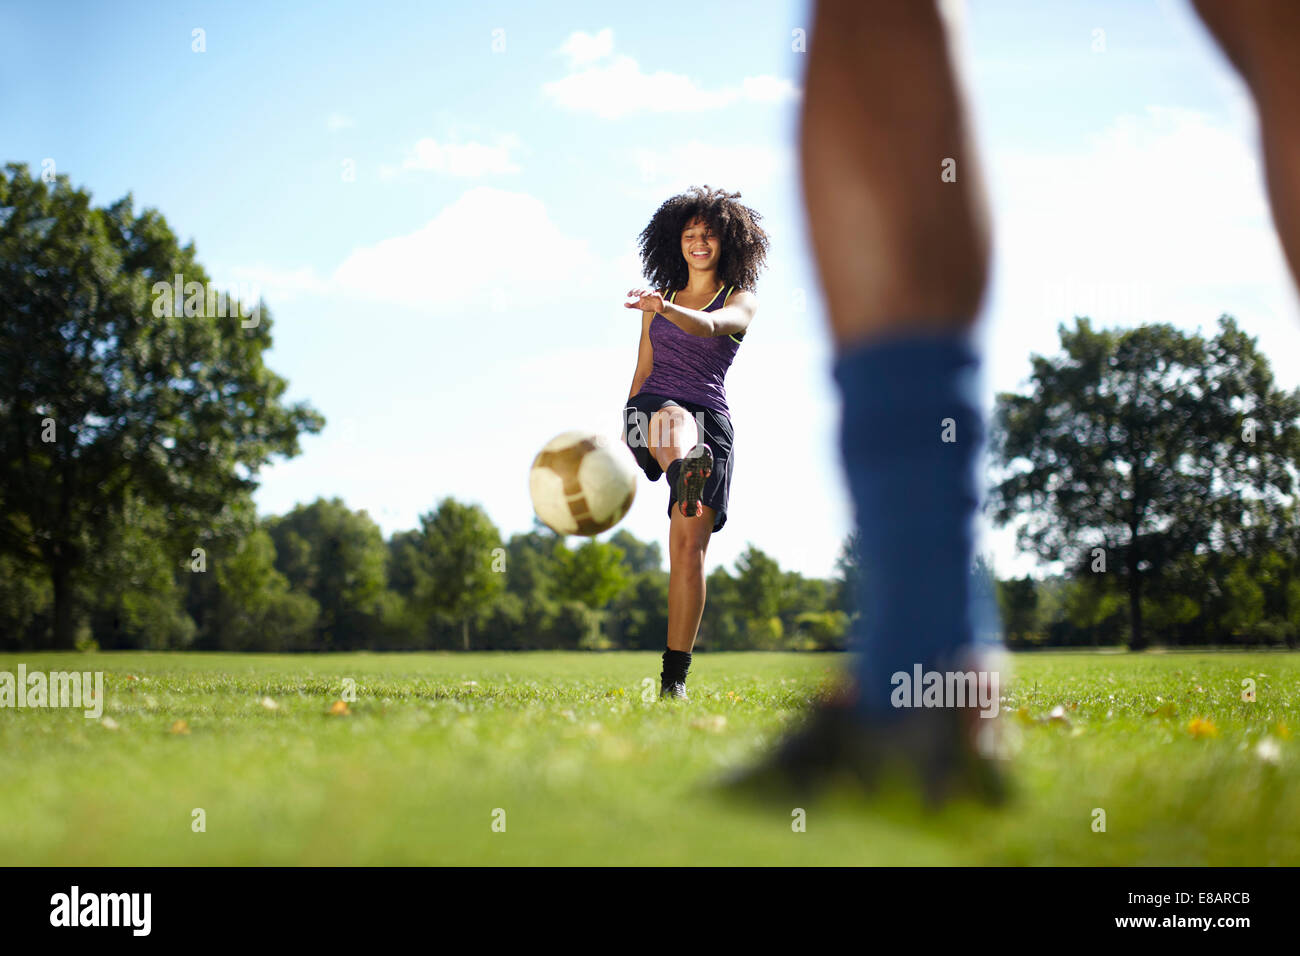 Man kicking ball hi-res stock photography and images - Alamy